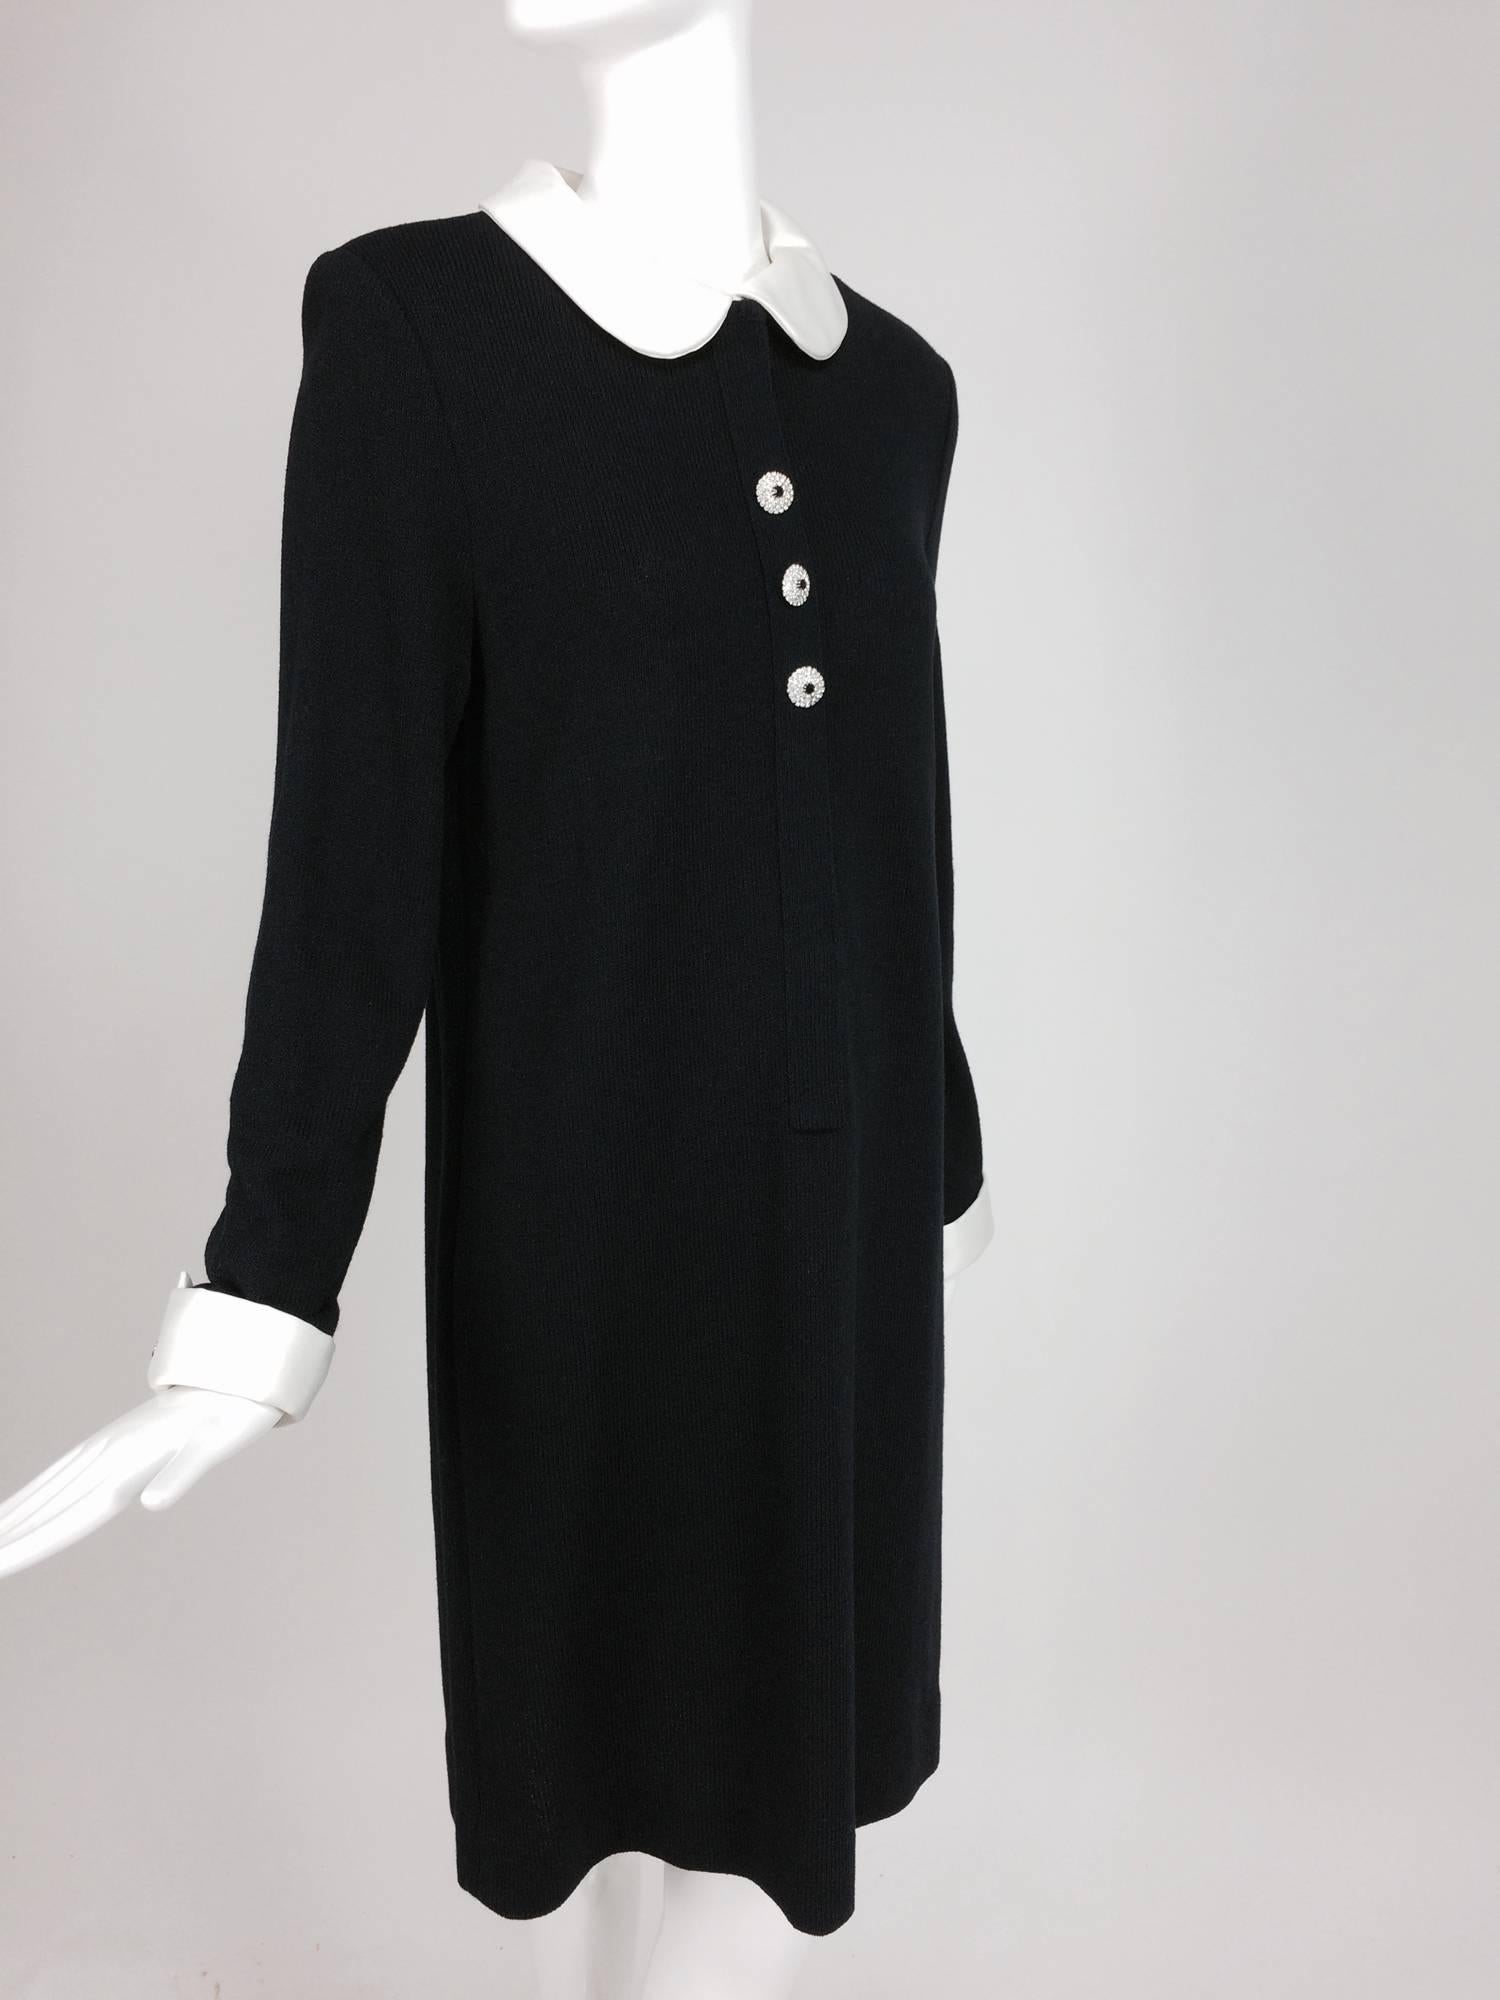 Adolfo black knit A line dress with white satin collar & cuffs 1970s size 12 2